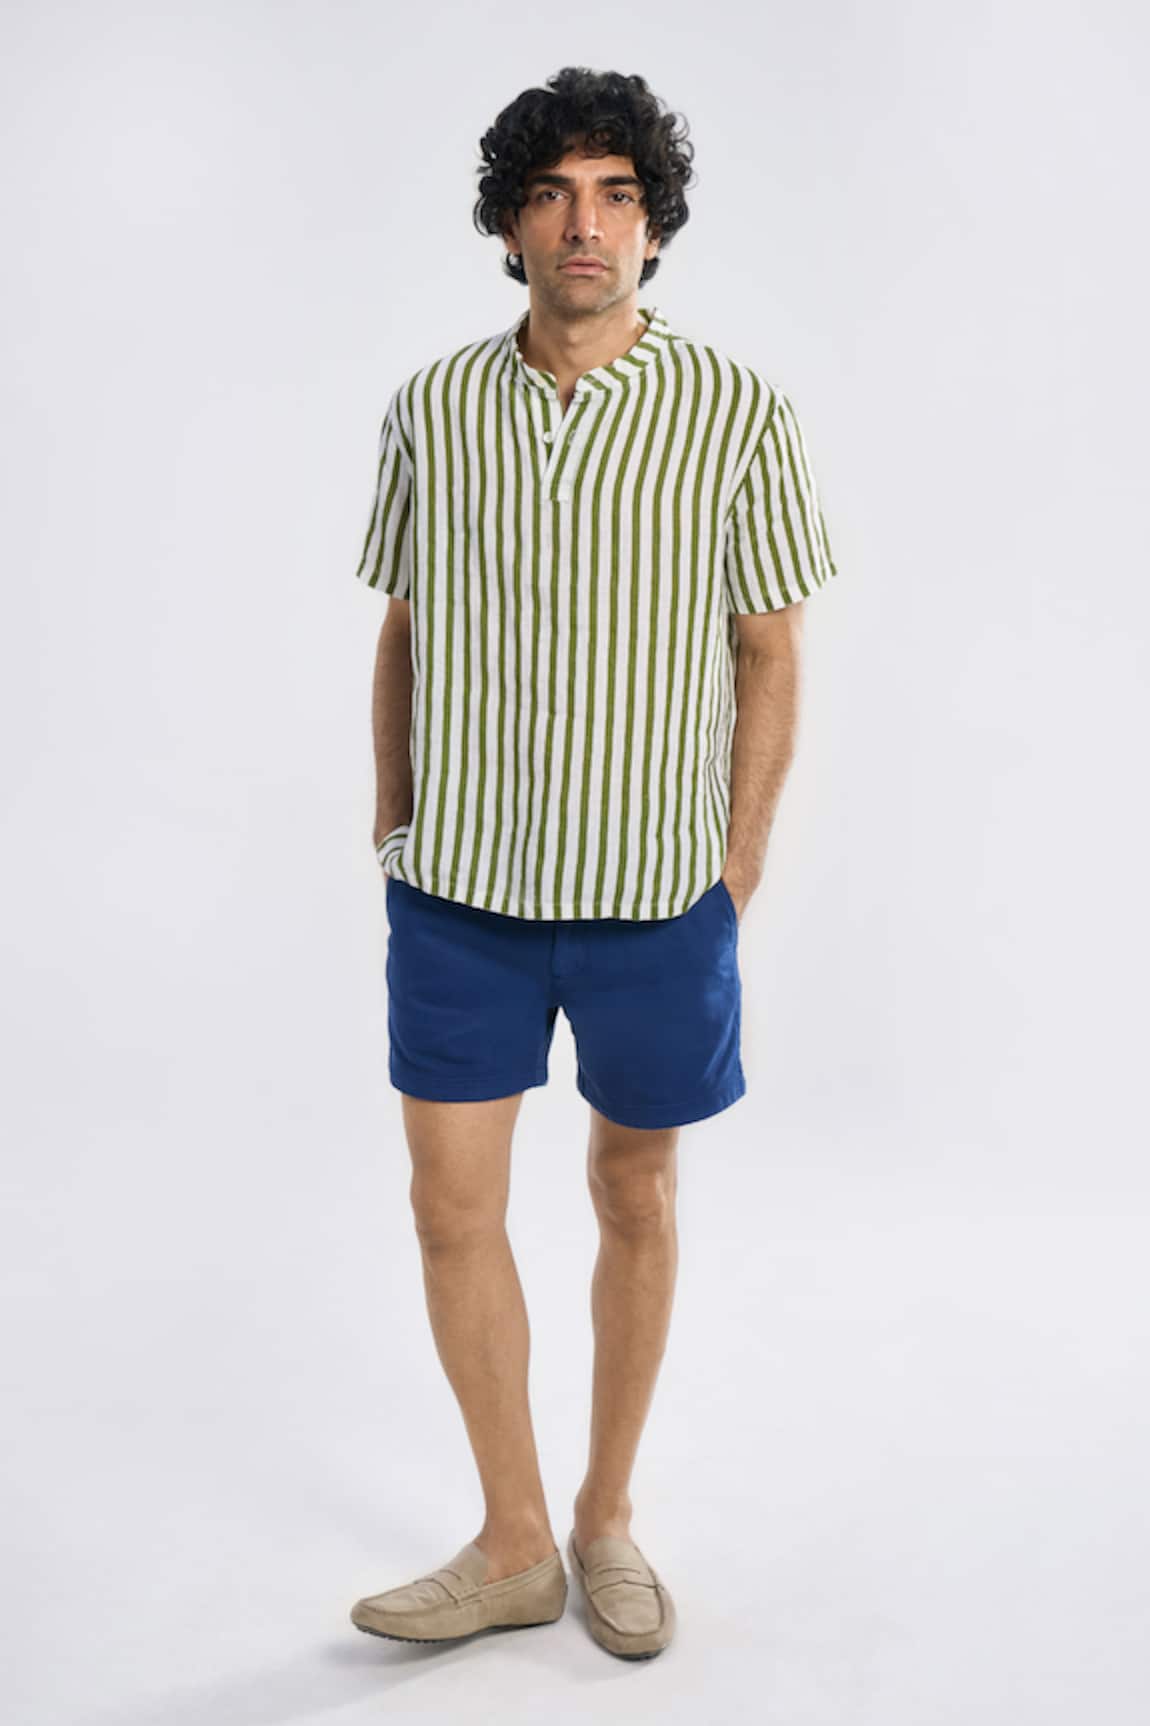 Terra Luna Woven Cabana Stripe Pattern T-Shirt